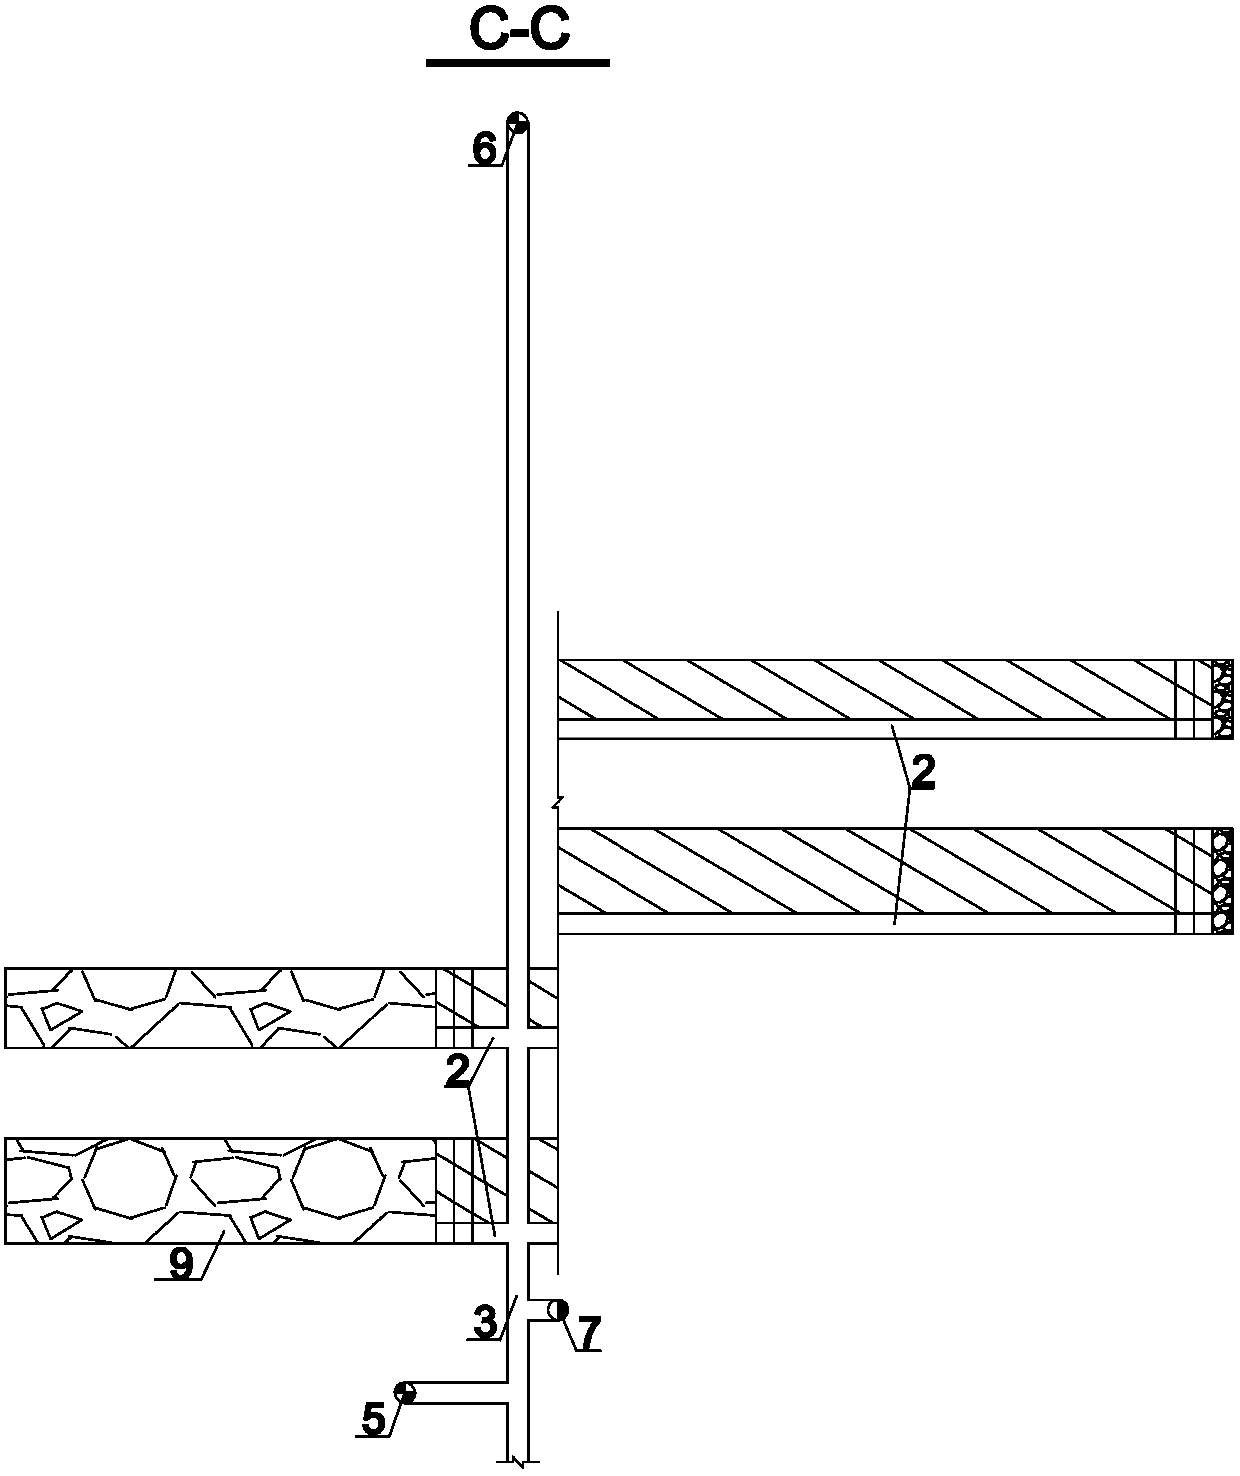 A Pillarless Segmental Caving Method for Dividing an Ore Block Along the Orebody Strike